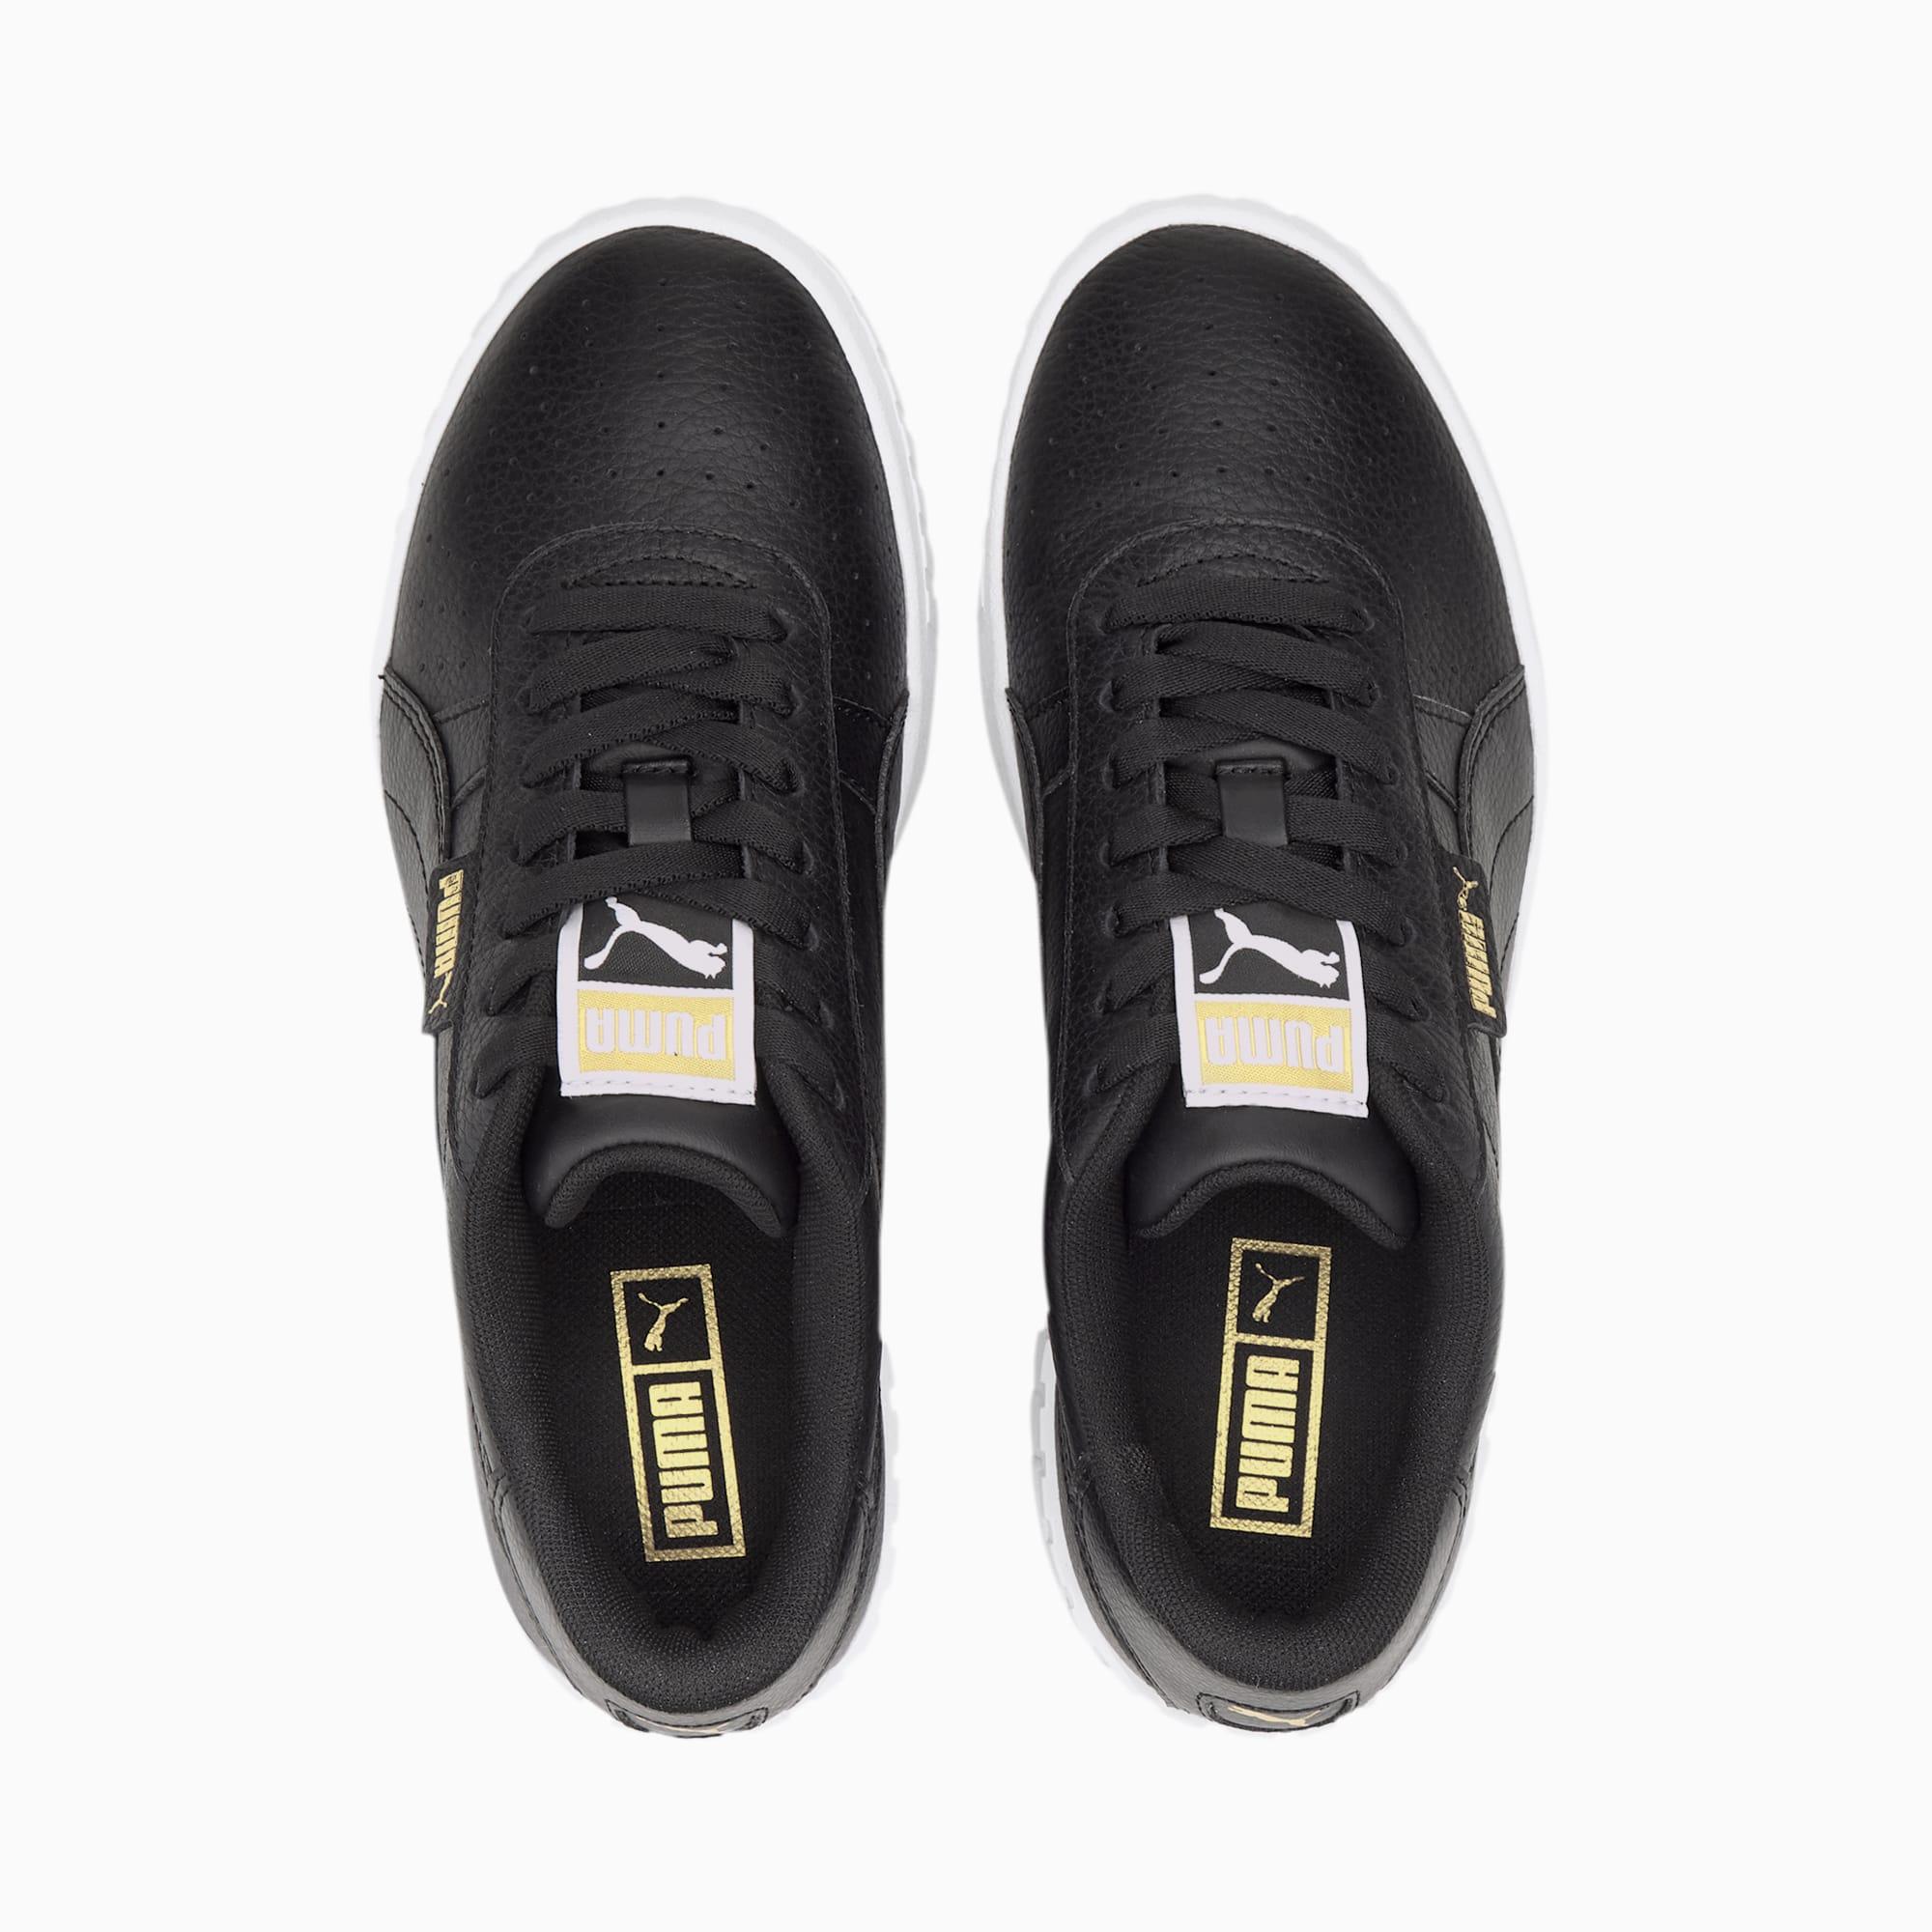 PUMA Cali Wedge Sneakers in Black - Lyst